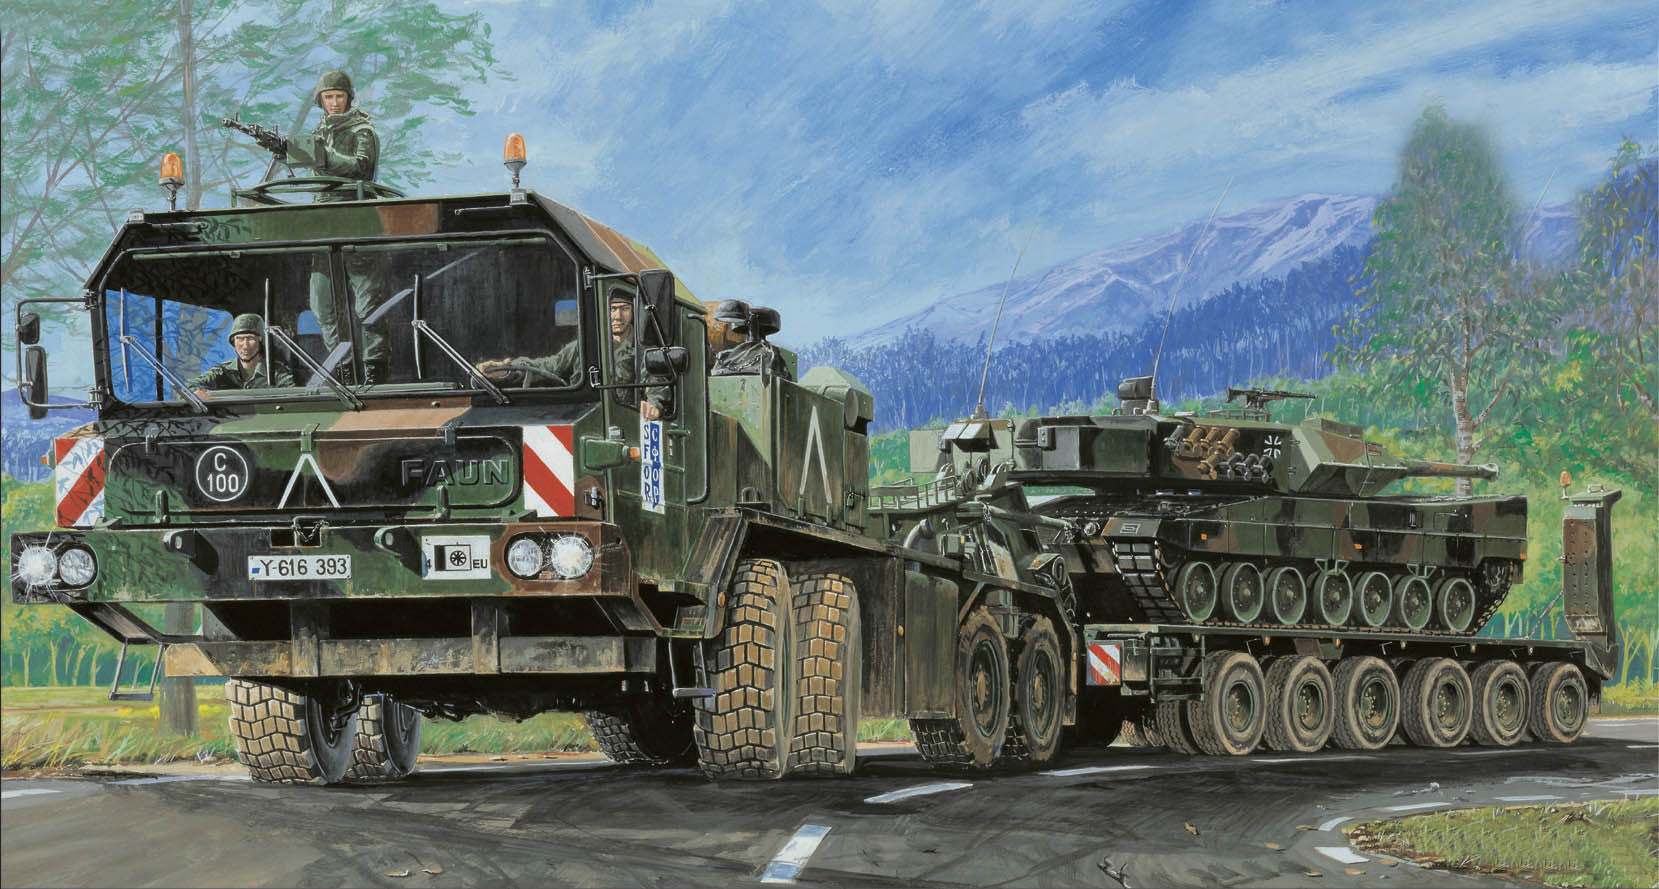 Trumpeter Military Models 1/35 German Faun Elefant SLT56 Tank Transport Kit